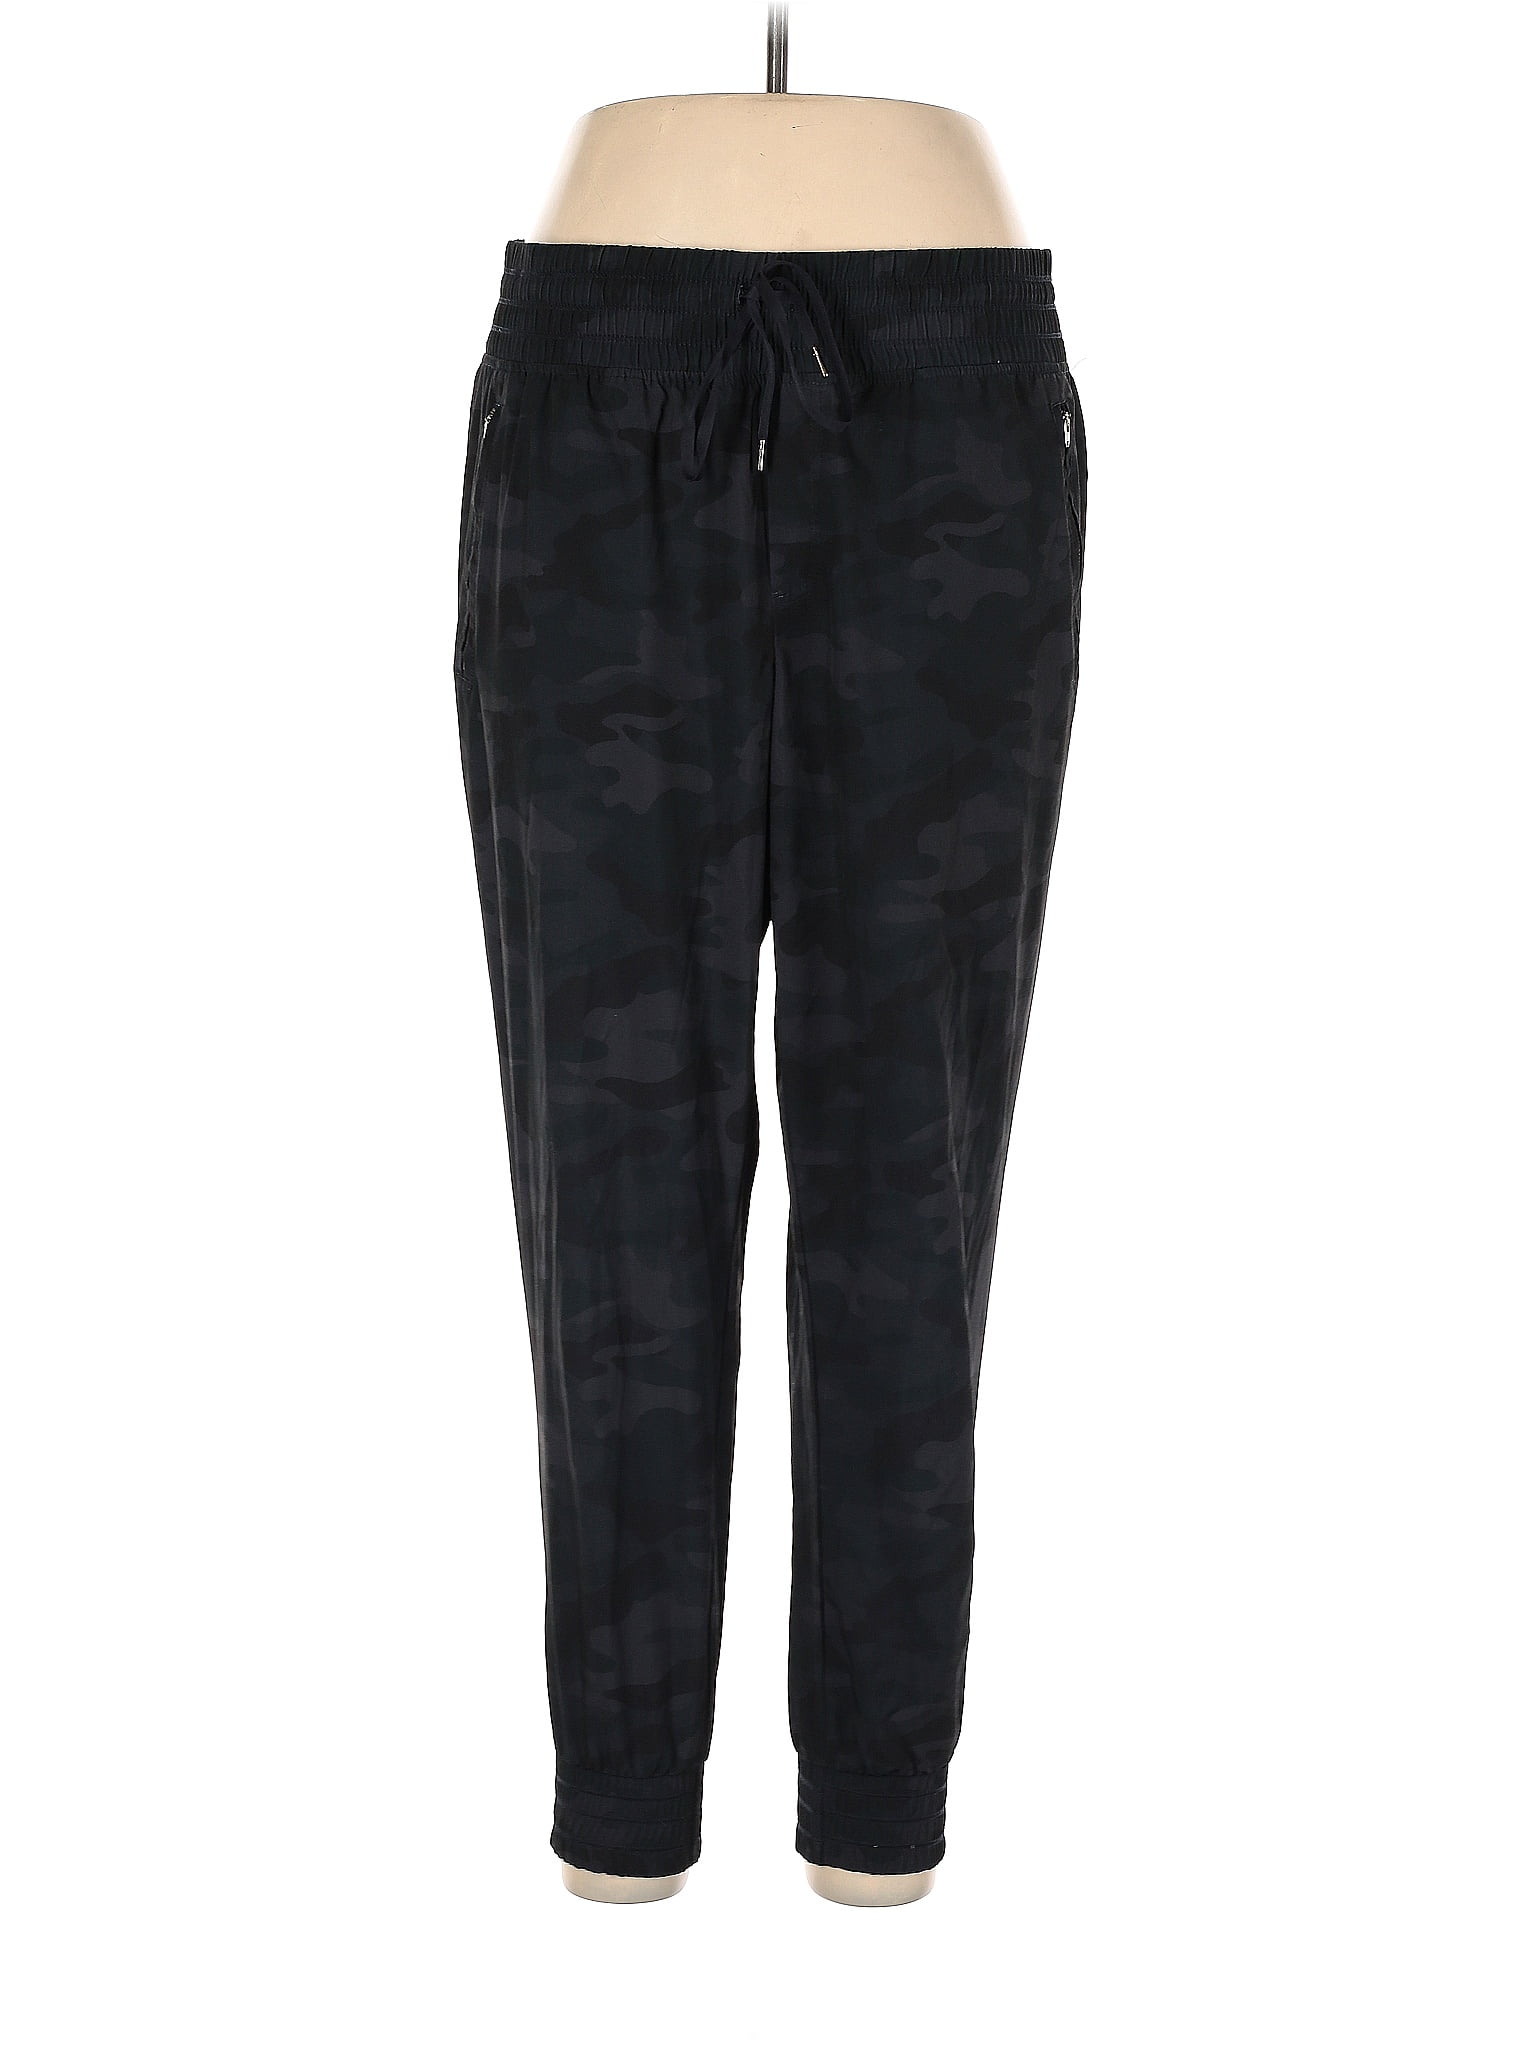 Danskin Camo Black Active Pants Size L - 41% off | thredUP